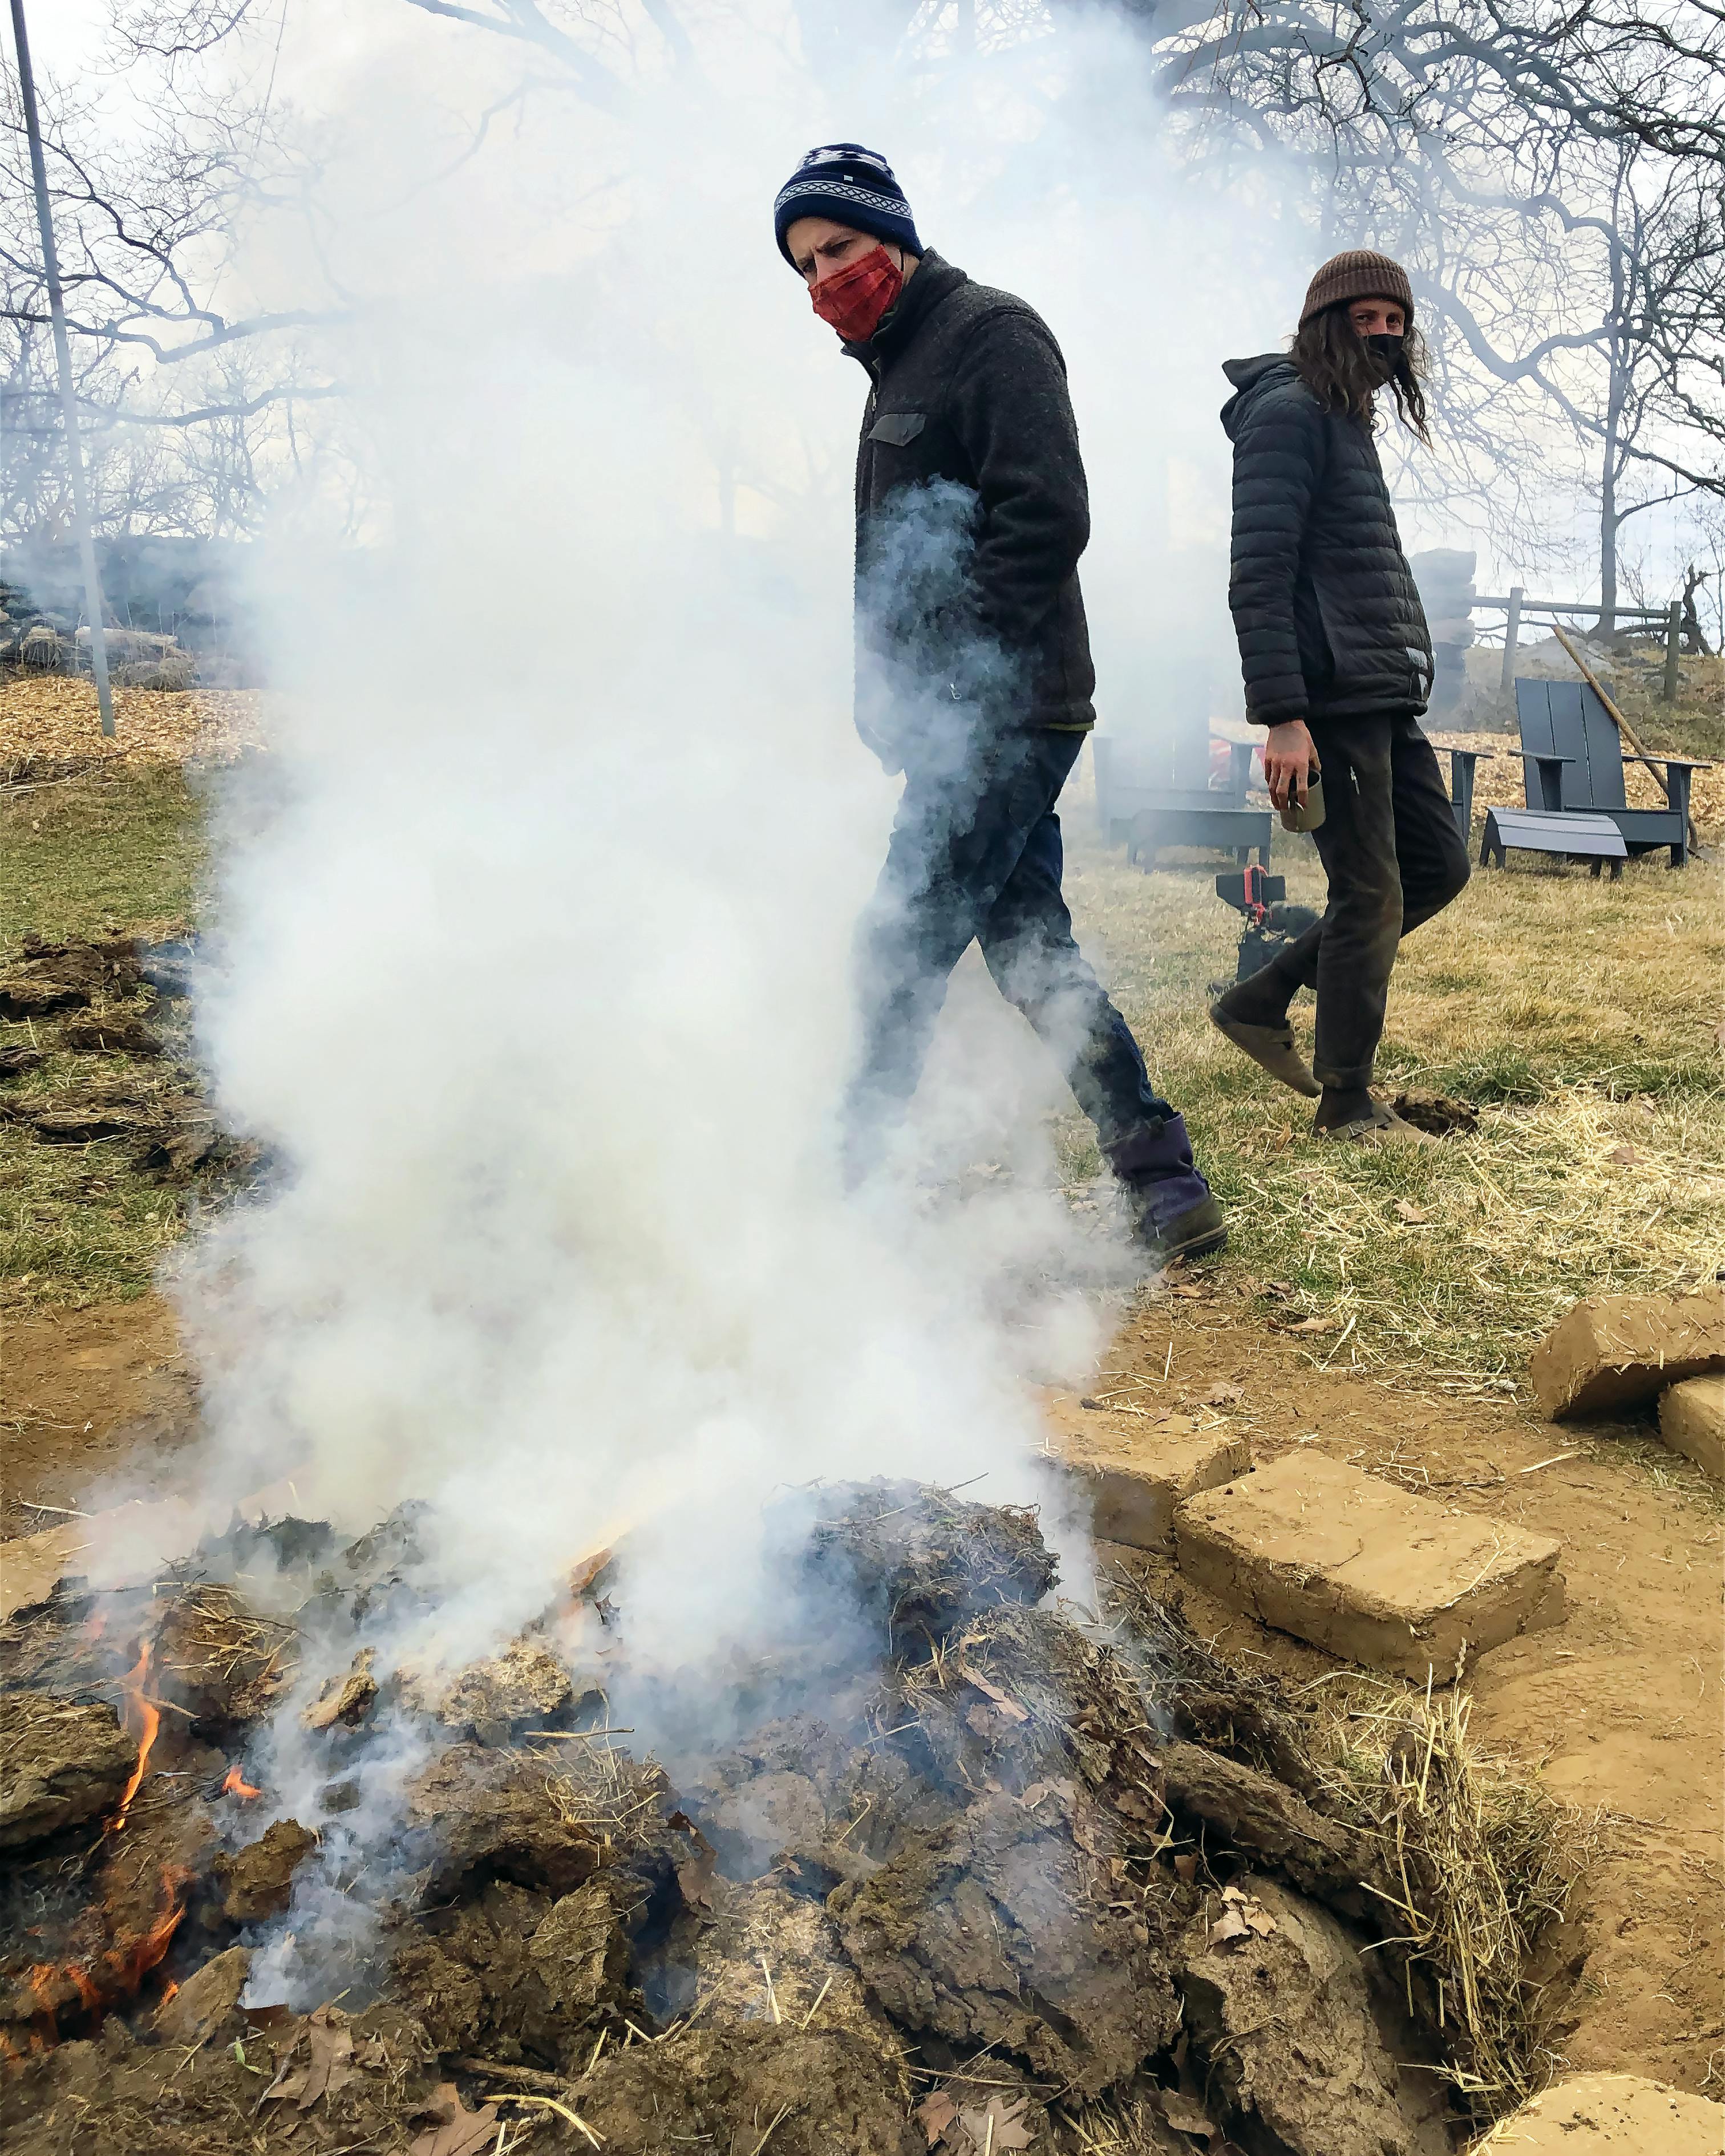 two masked people walking around a smoking pit fire